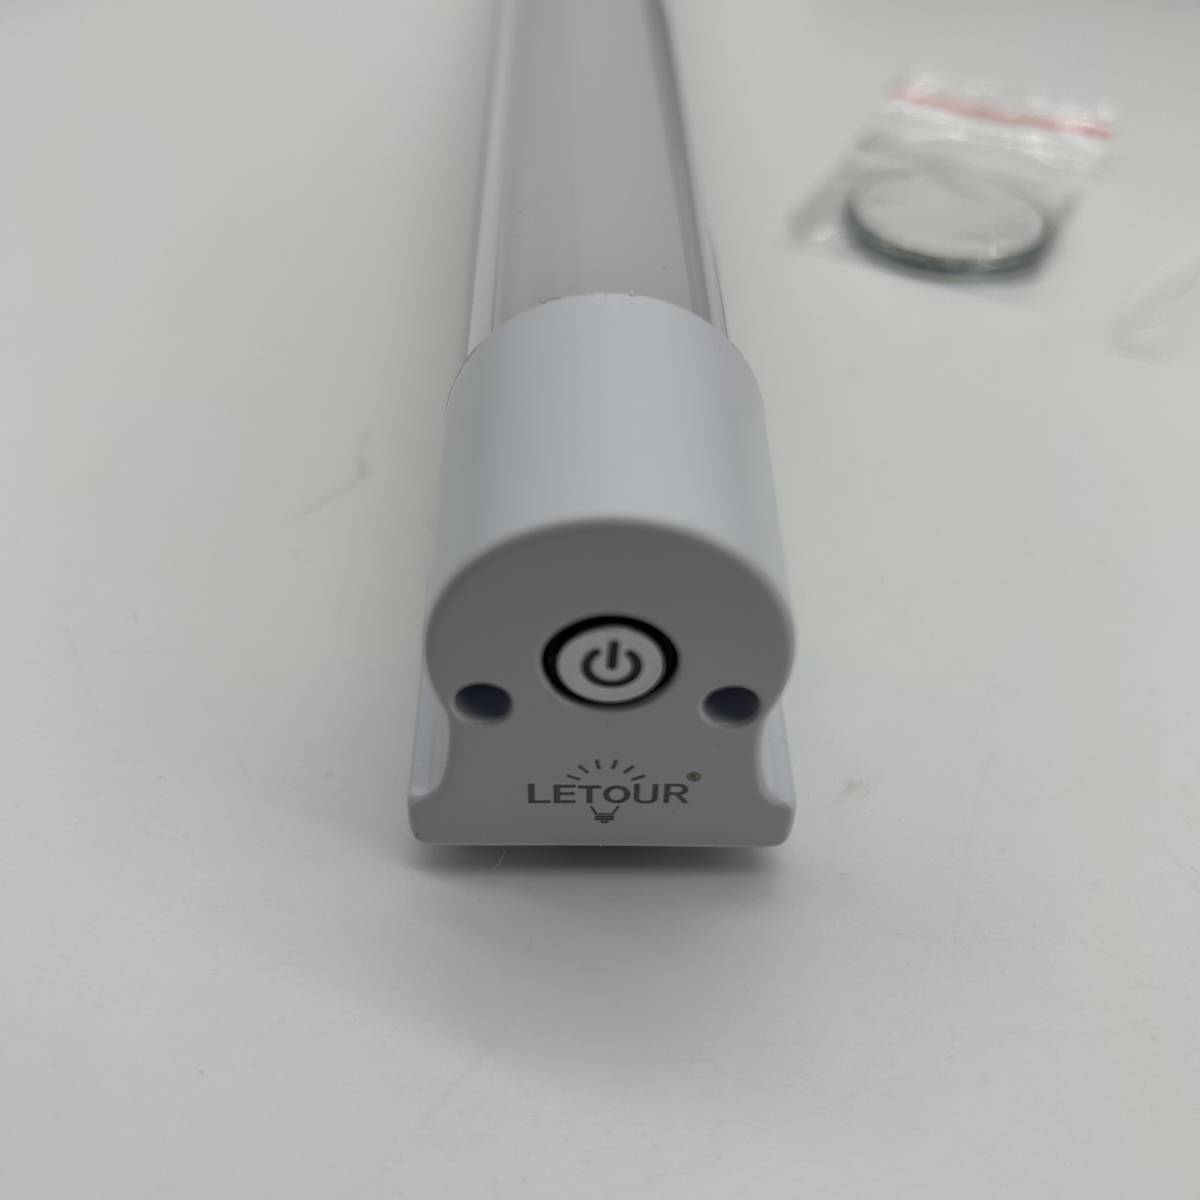 LETOUR LEDライト 蛍光灯 作業灯 USB充電式 マグネット付き K251 120W 10400MAH アウトドア 高輝度 5段階点灯 10000ルーメン (LT-LT120W)_画像4